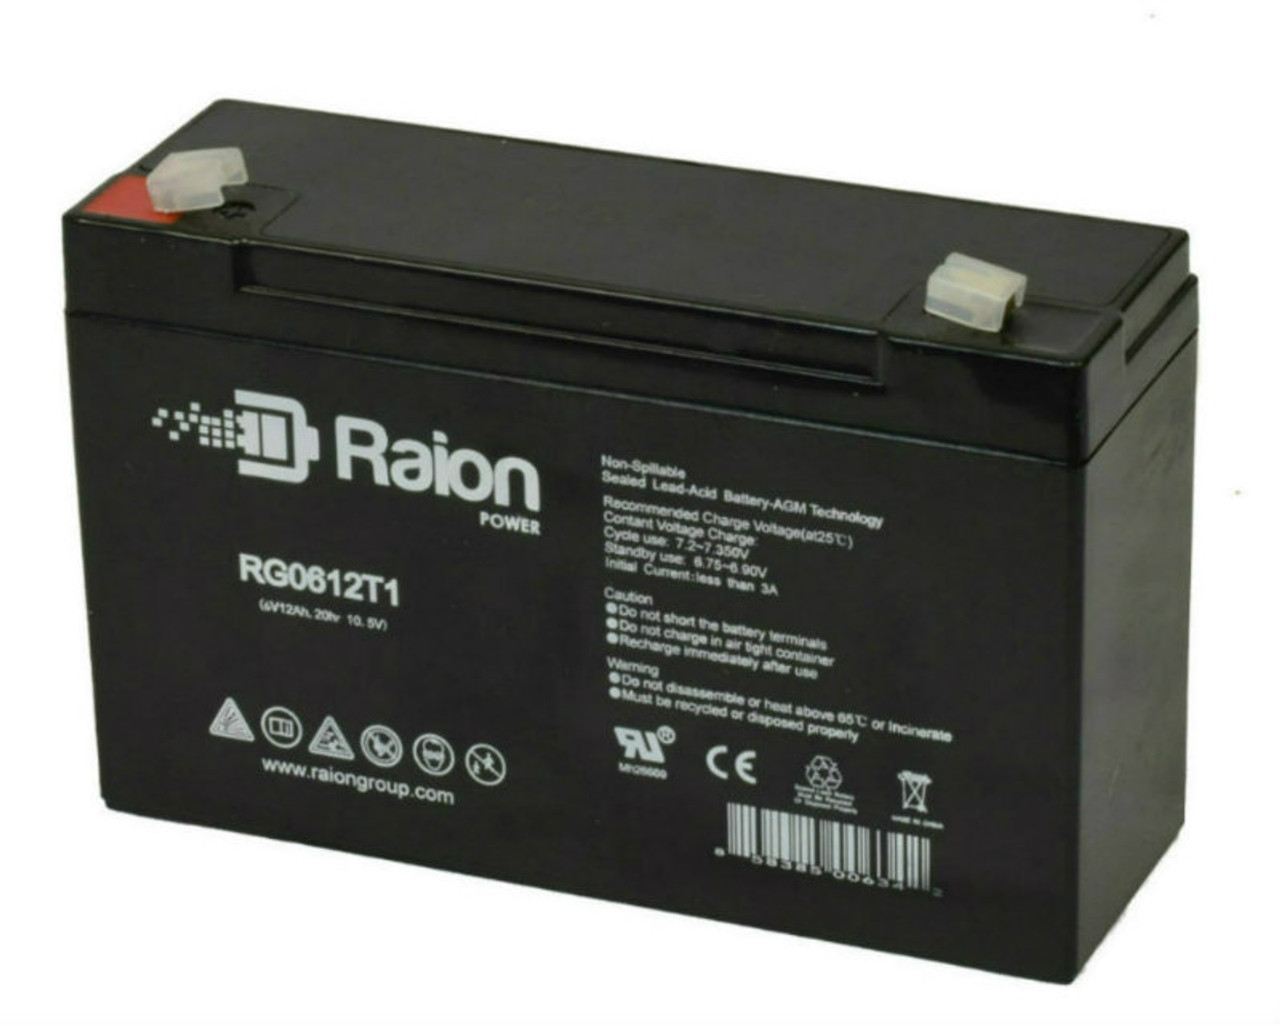 Raion Power RG06120T1 Replacement Spotlight Battery for Streamlight SL40-F2